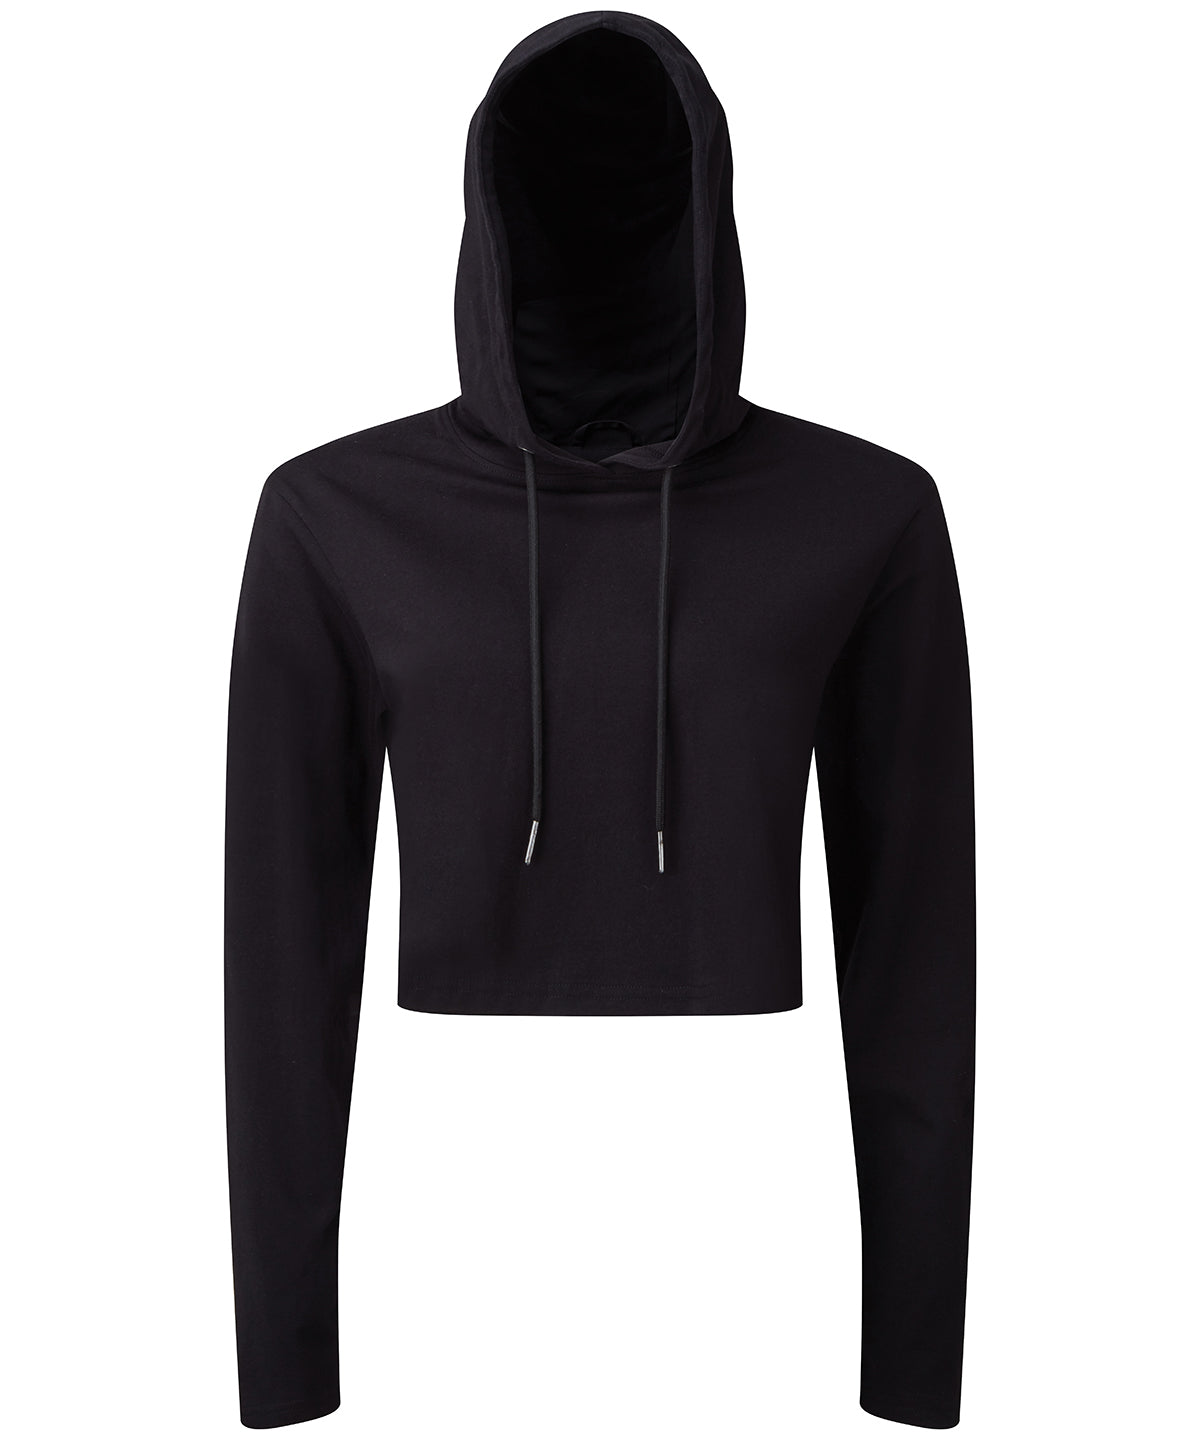 Hettupeysur - Women's TriDri® Cropped Hooded Long Sleeve T-shirt